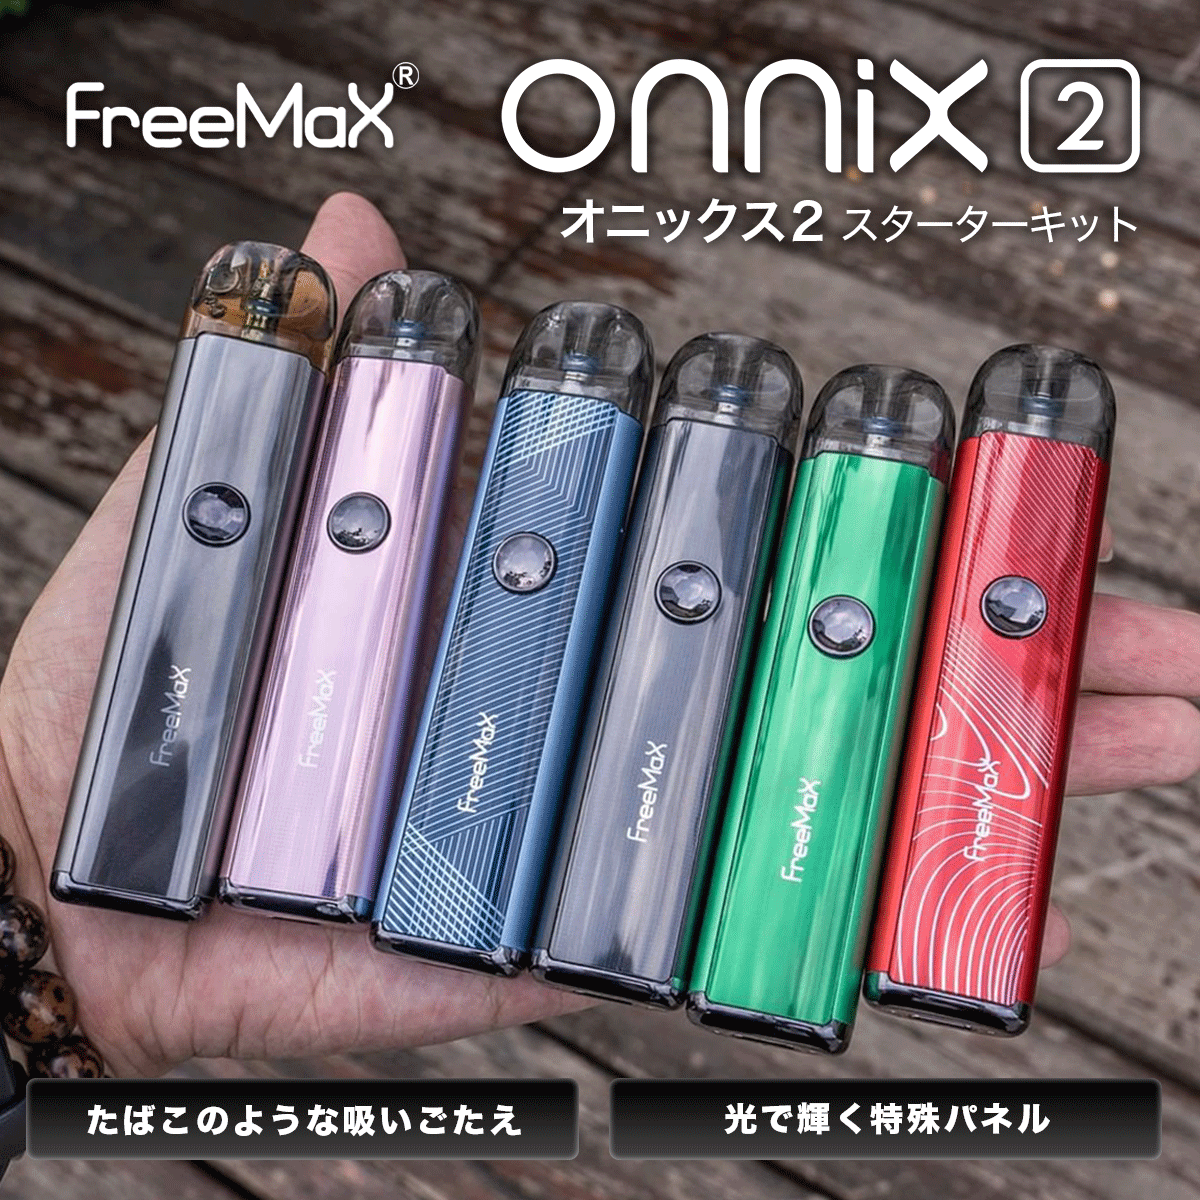 VAPE(電子タバコ)とリキッド通販 ベプログショップ 【Freemax】Onnix Kit (オニックス2キット) ピンク